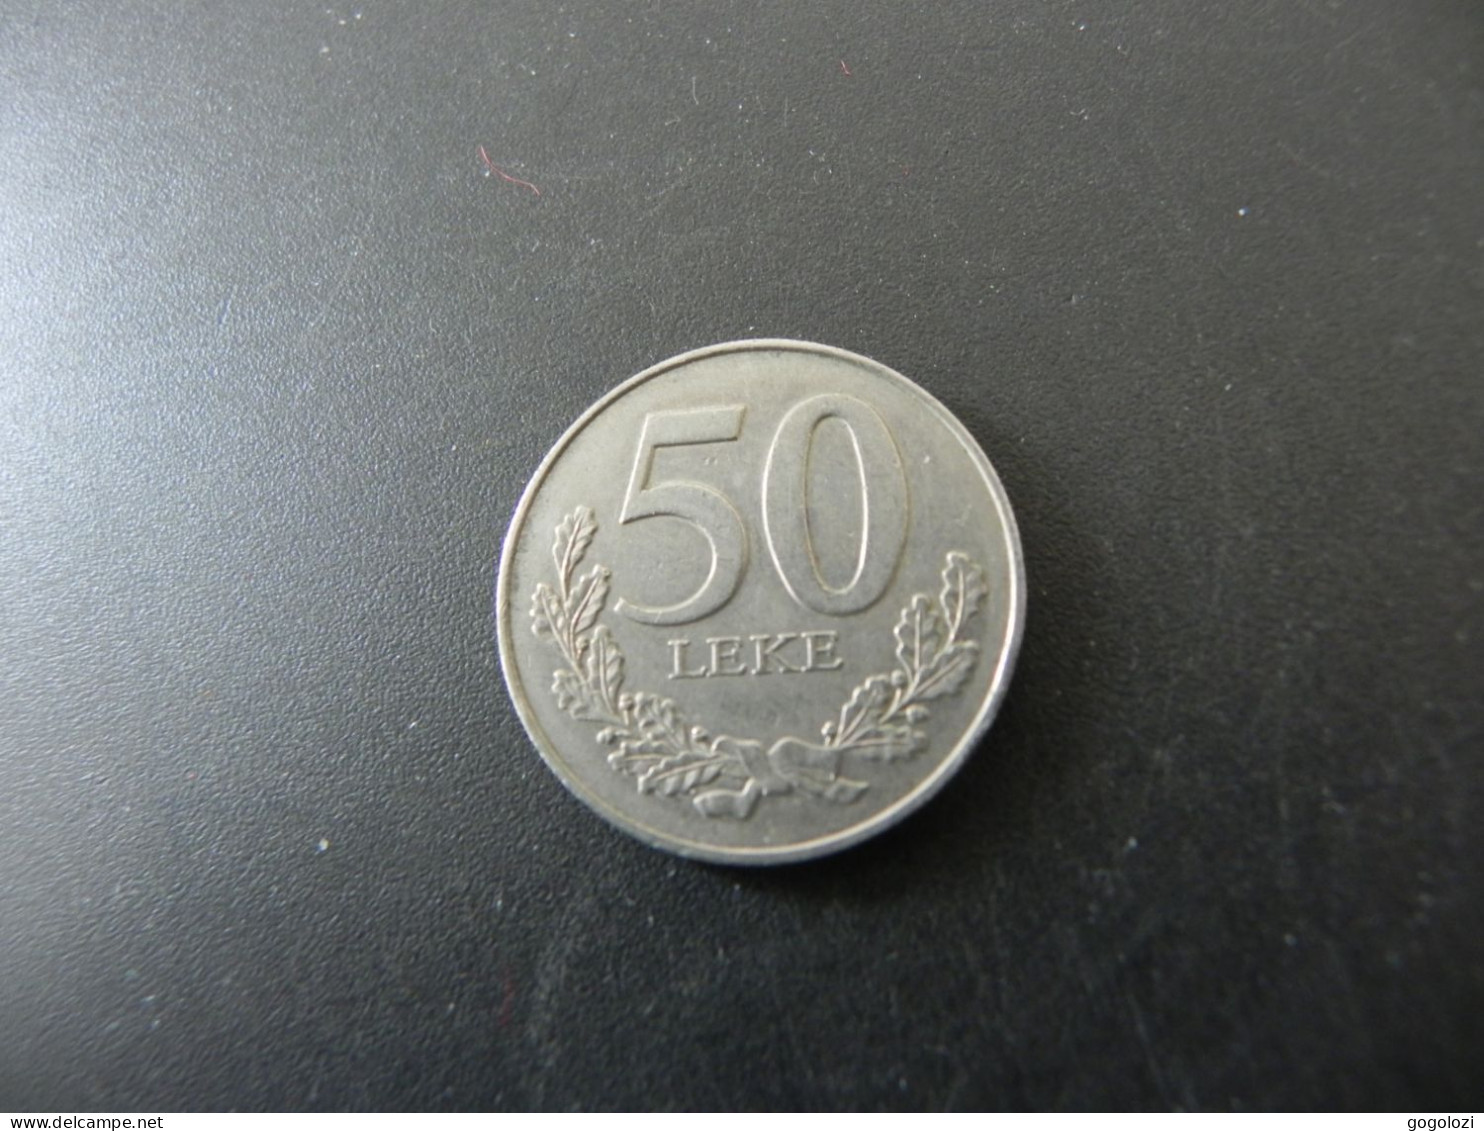 Albania 50 Leke 2000 - Albanien